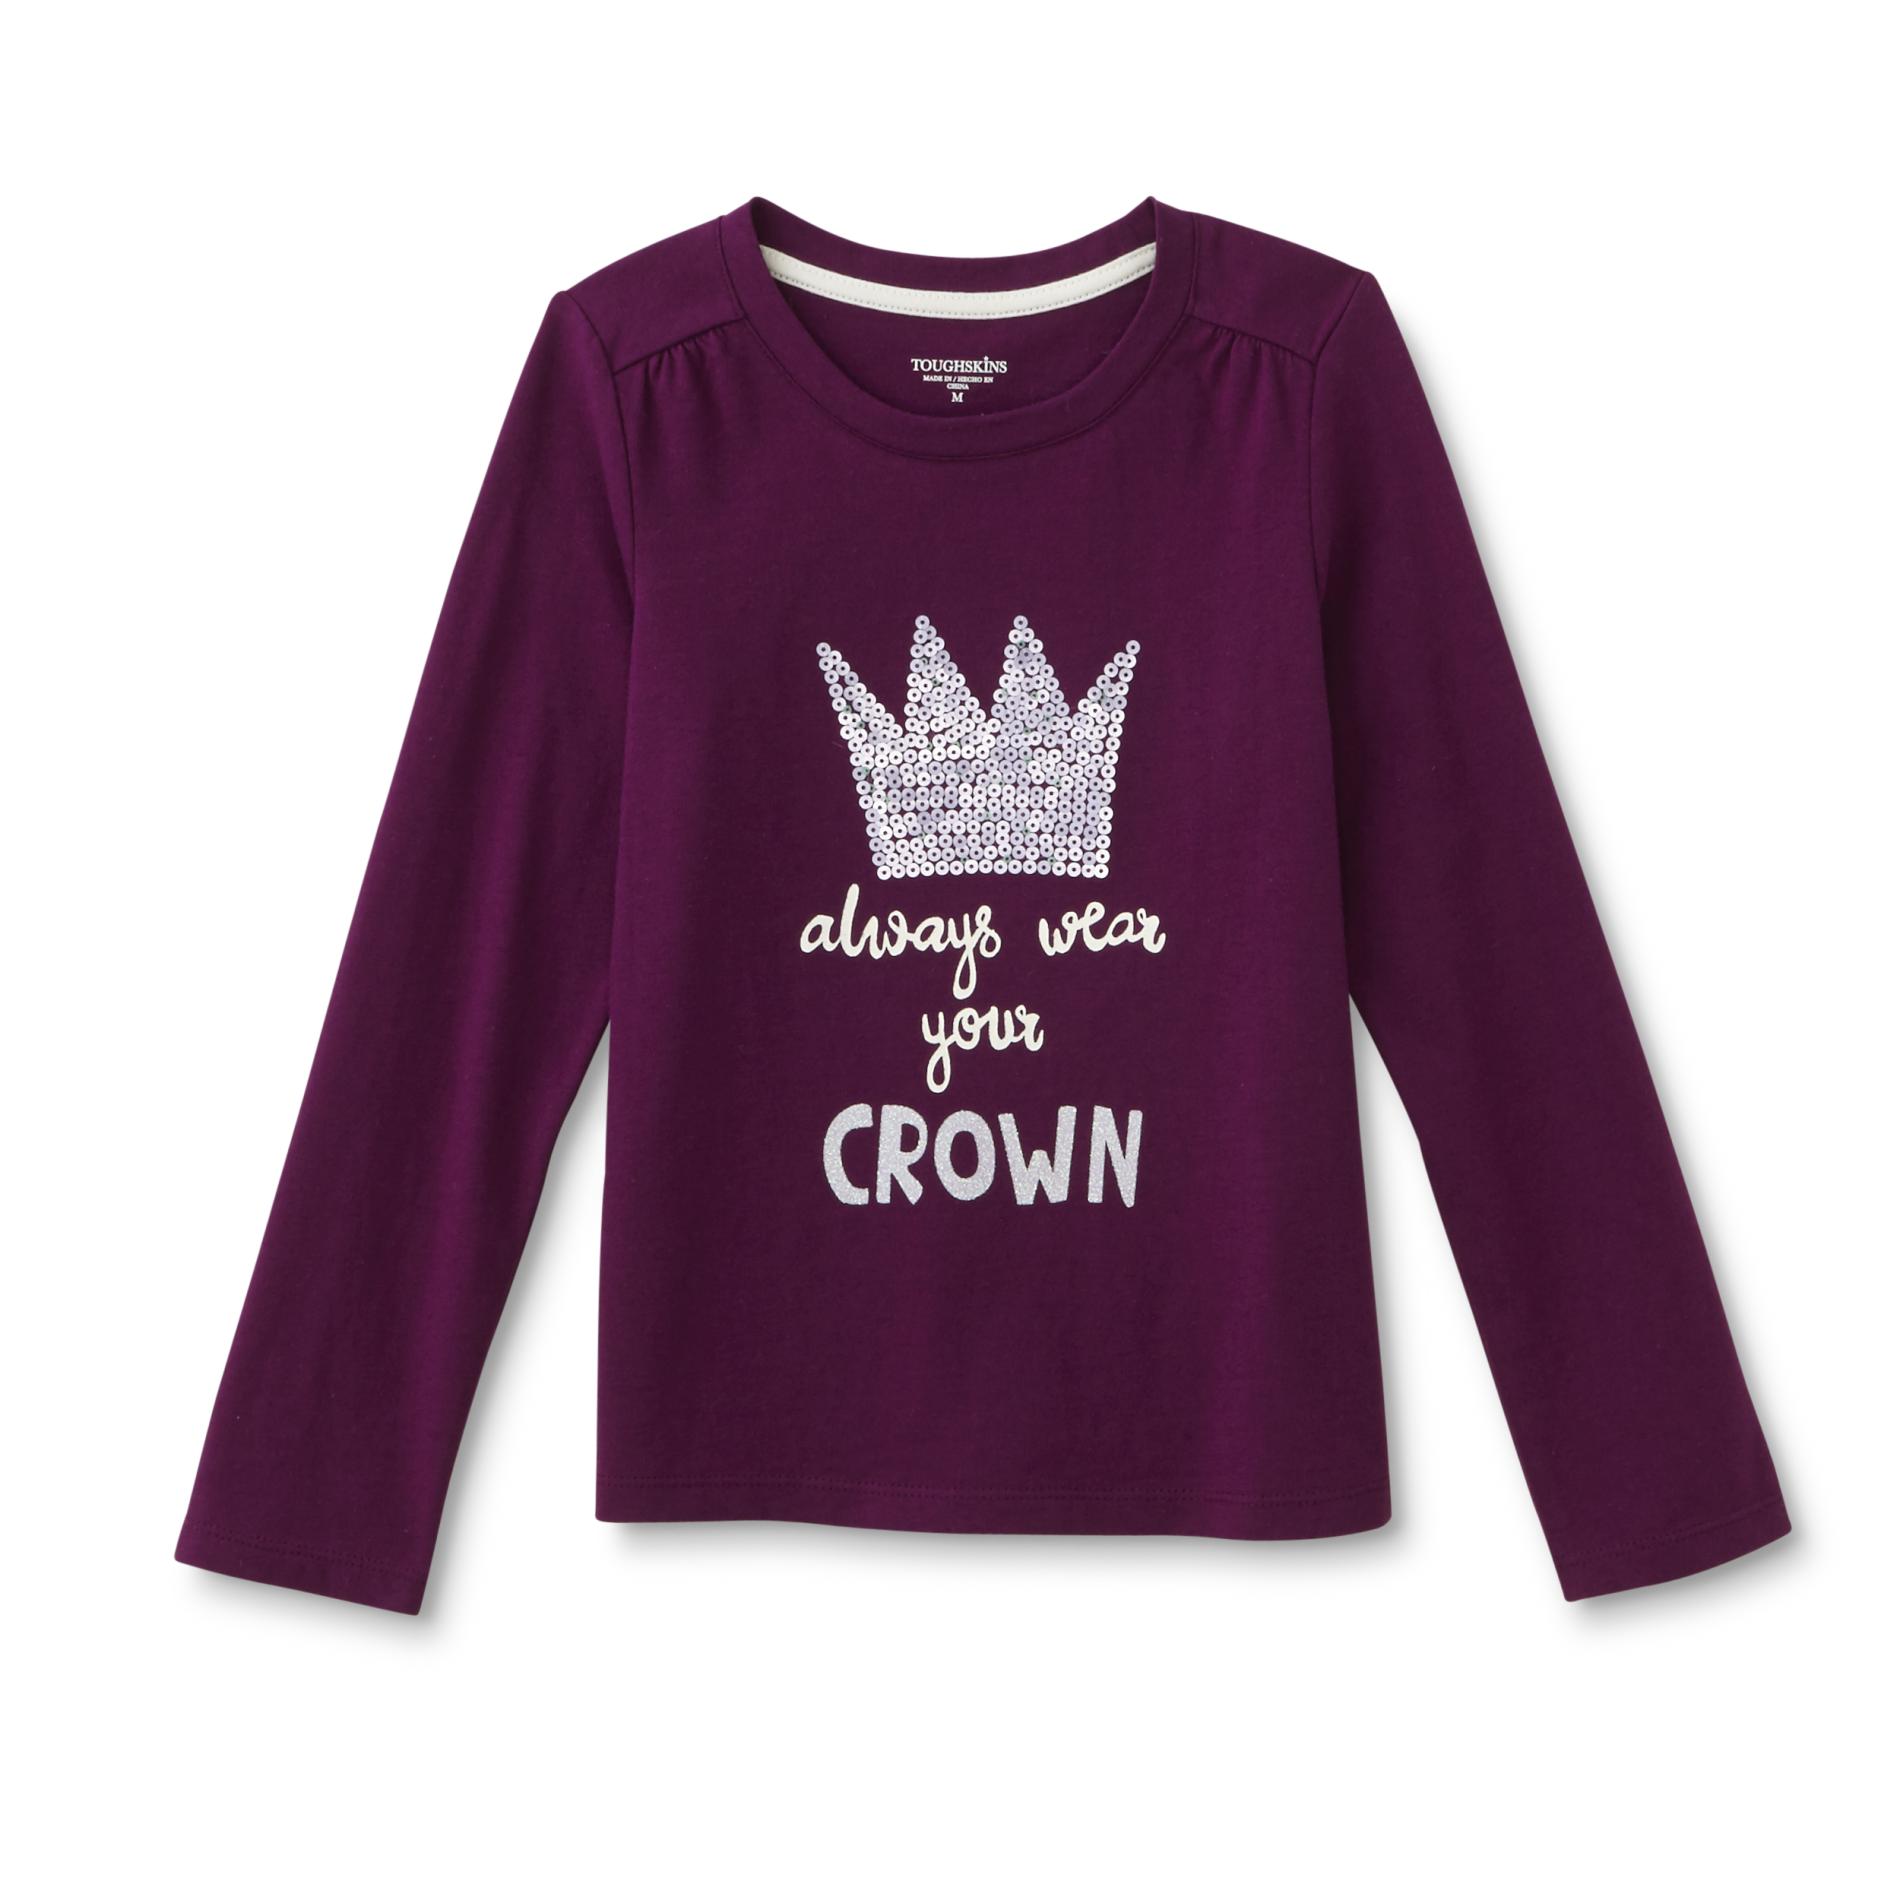 Toughskins Infant & Toddler Girl's Long-Sleeve Top - Crown